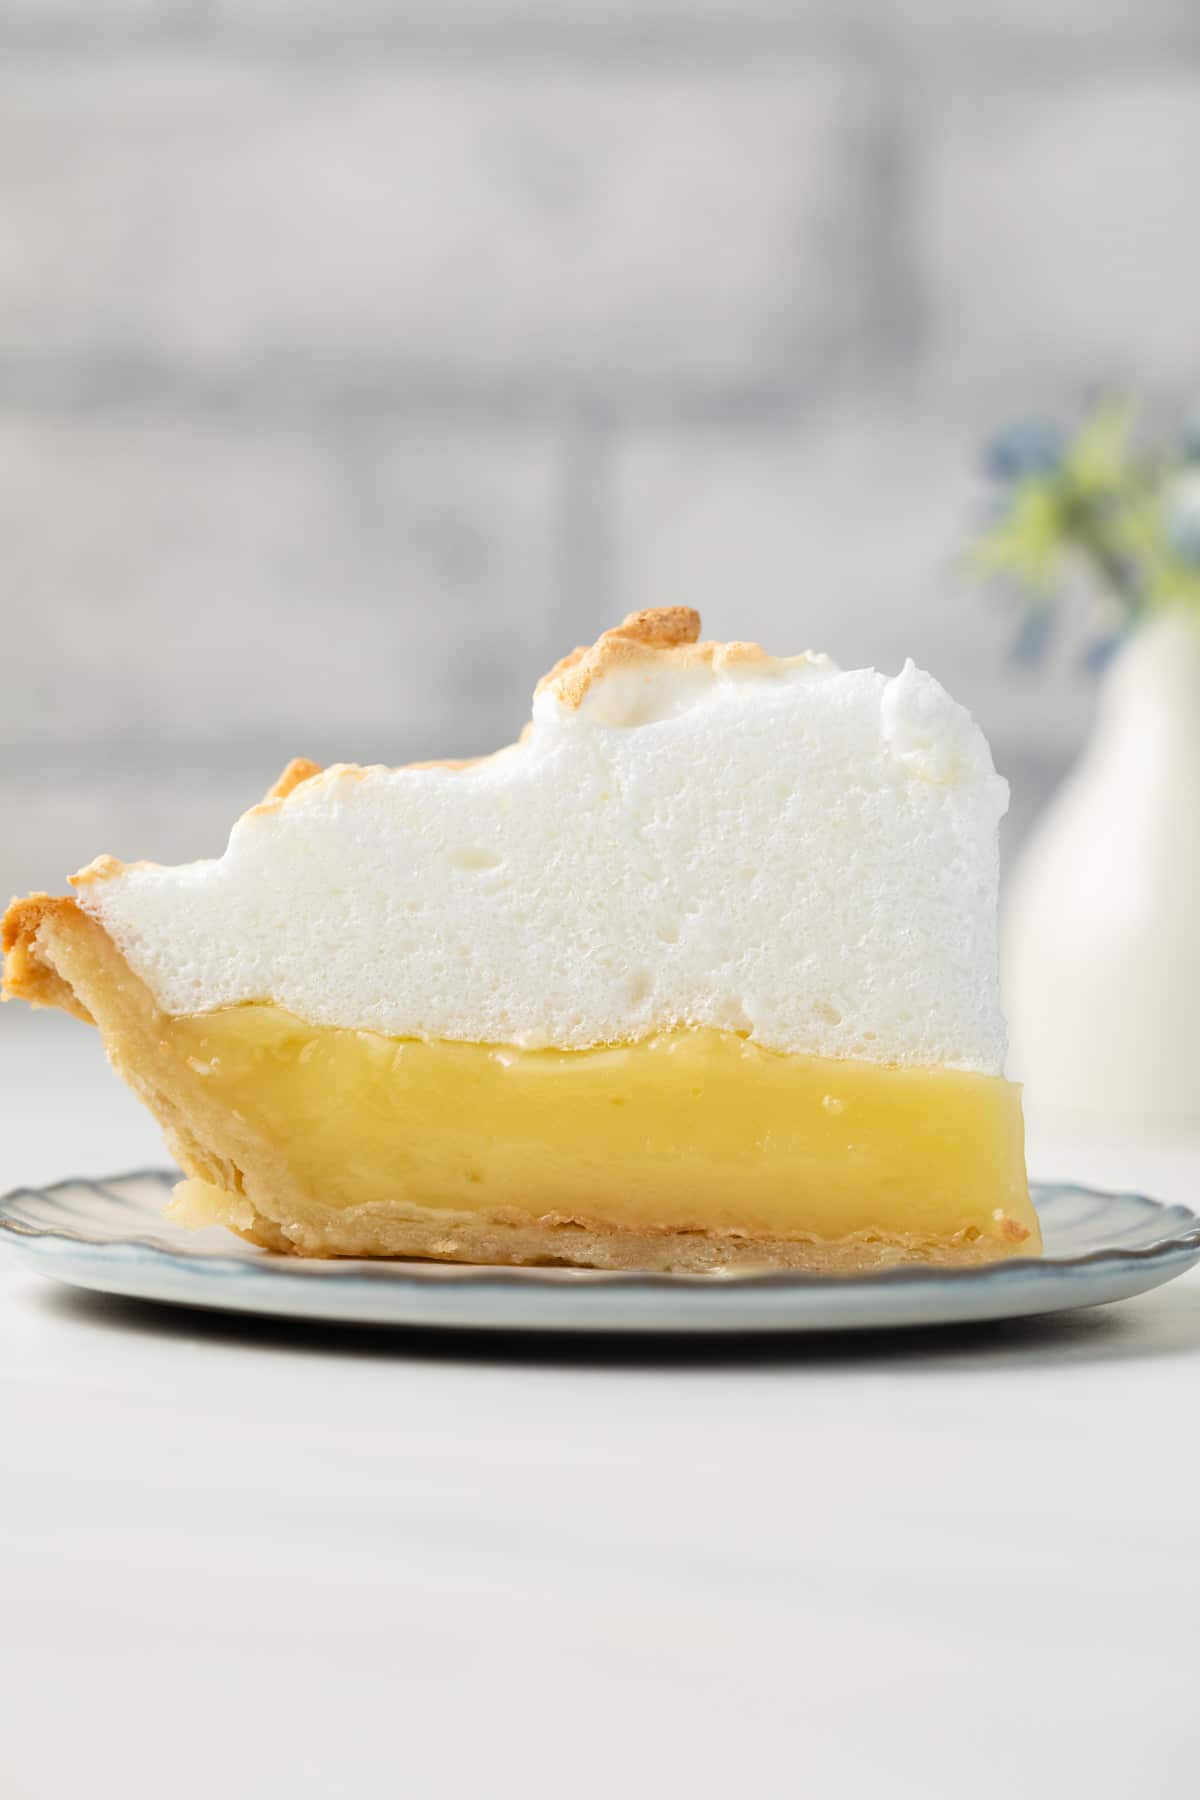 Slice of lemon meringue pie.